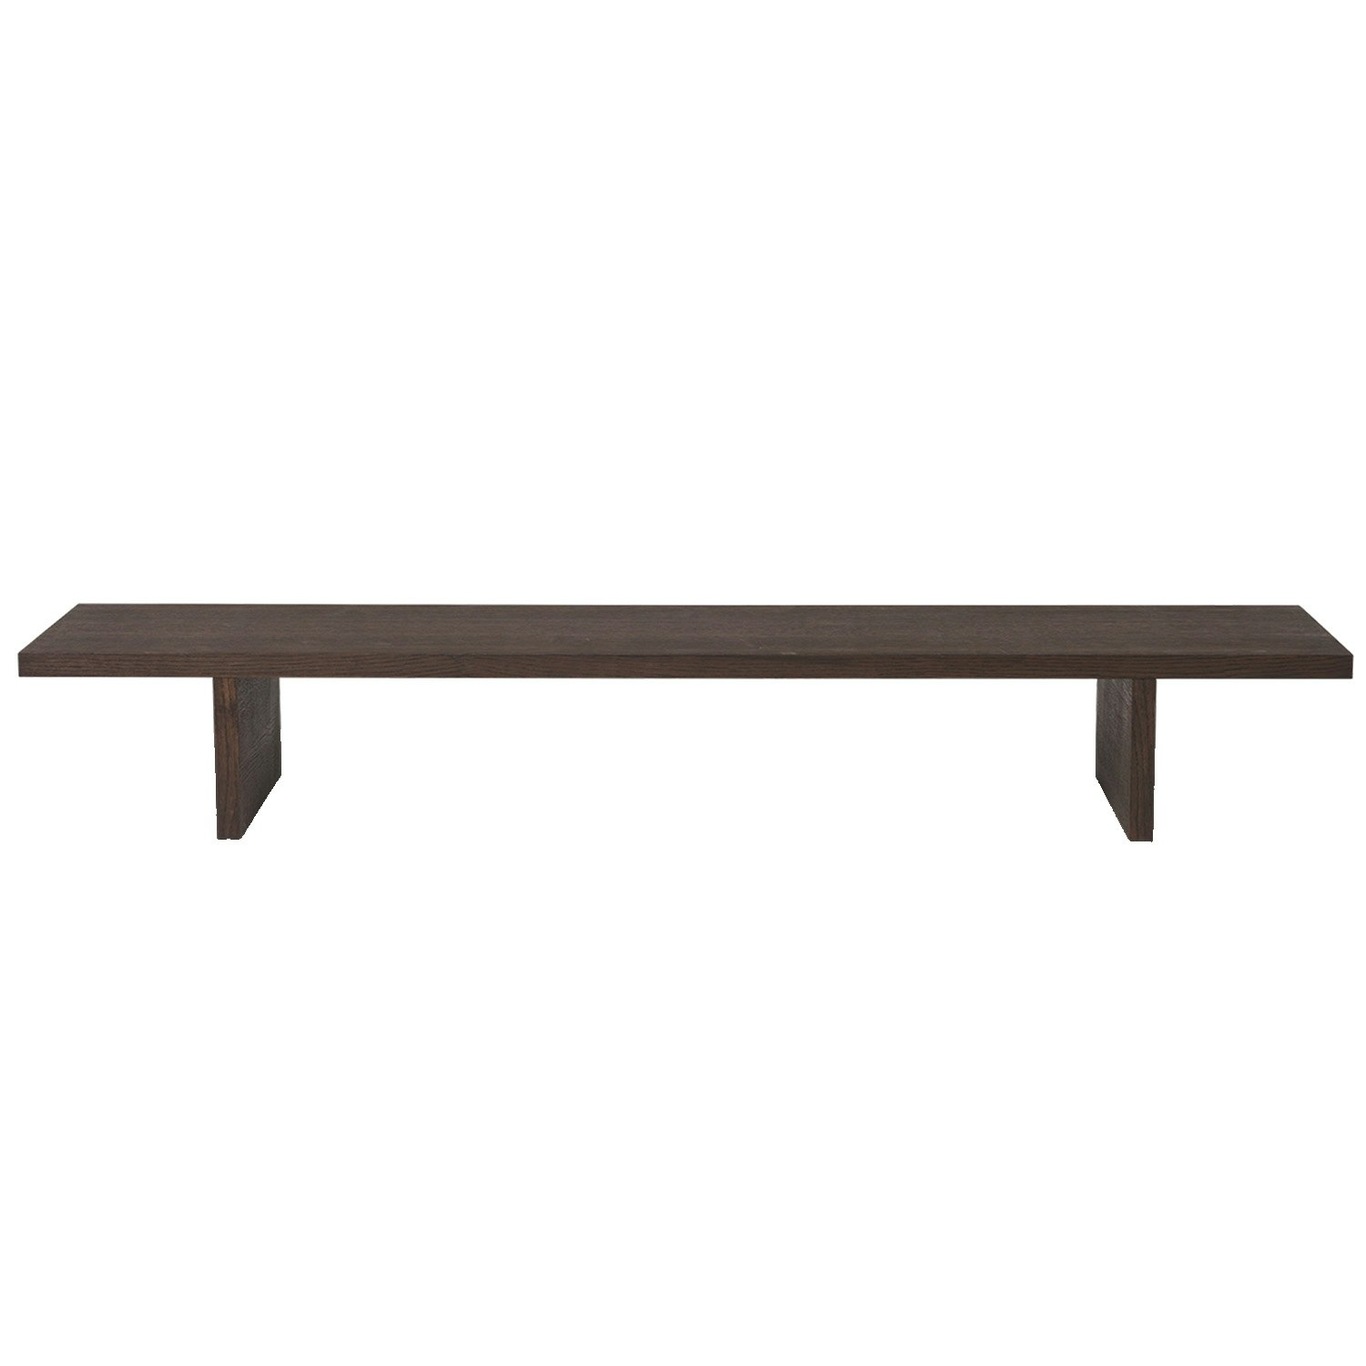 Kona Side Table 34x138 cm, Dark Stained